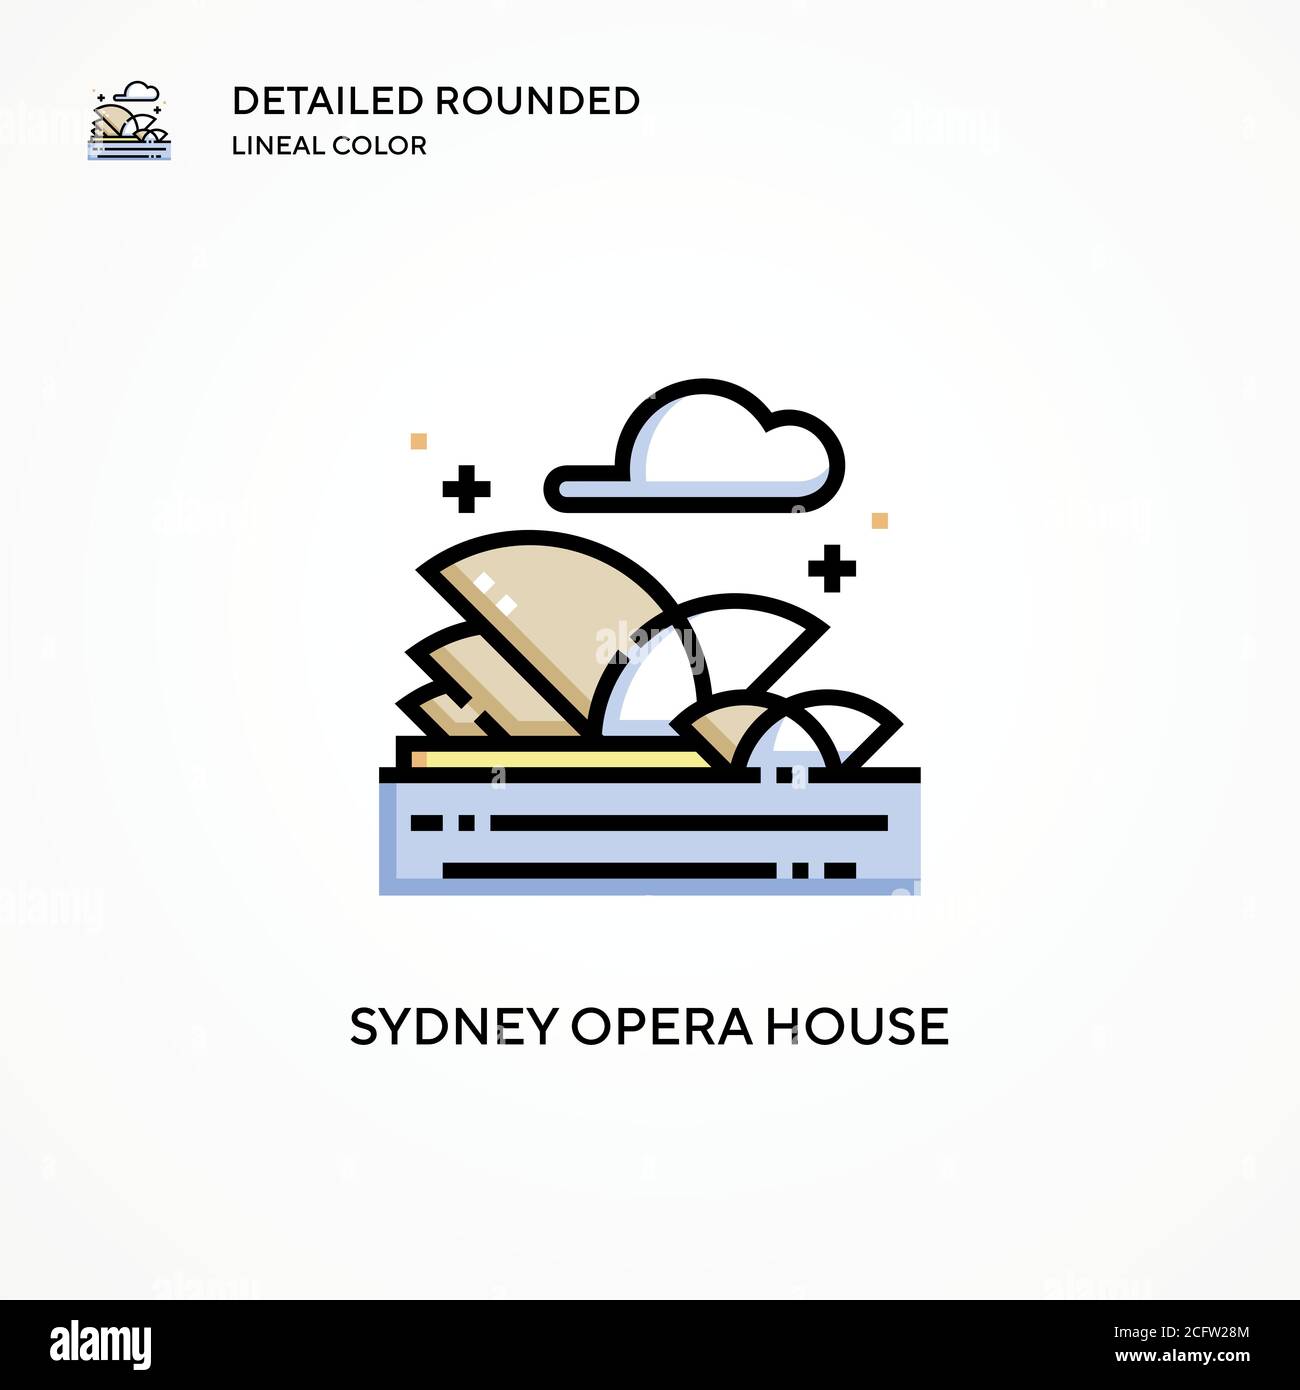 Sydney Opera House Vektor-Symbol. Moderne Vektorgrafik Konzepte. Einfach zu bearbeiten und anzupassen. Stock Vektor